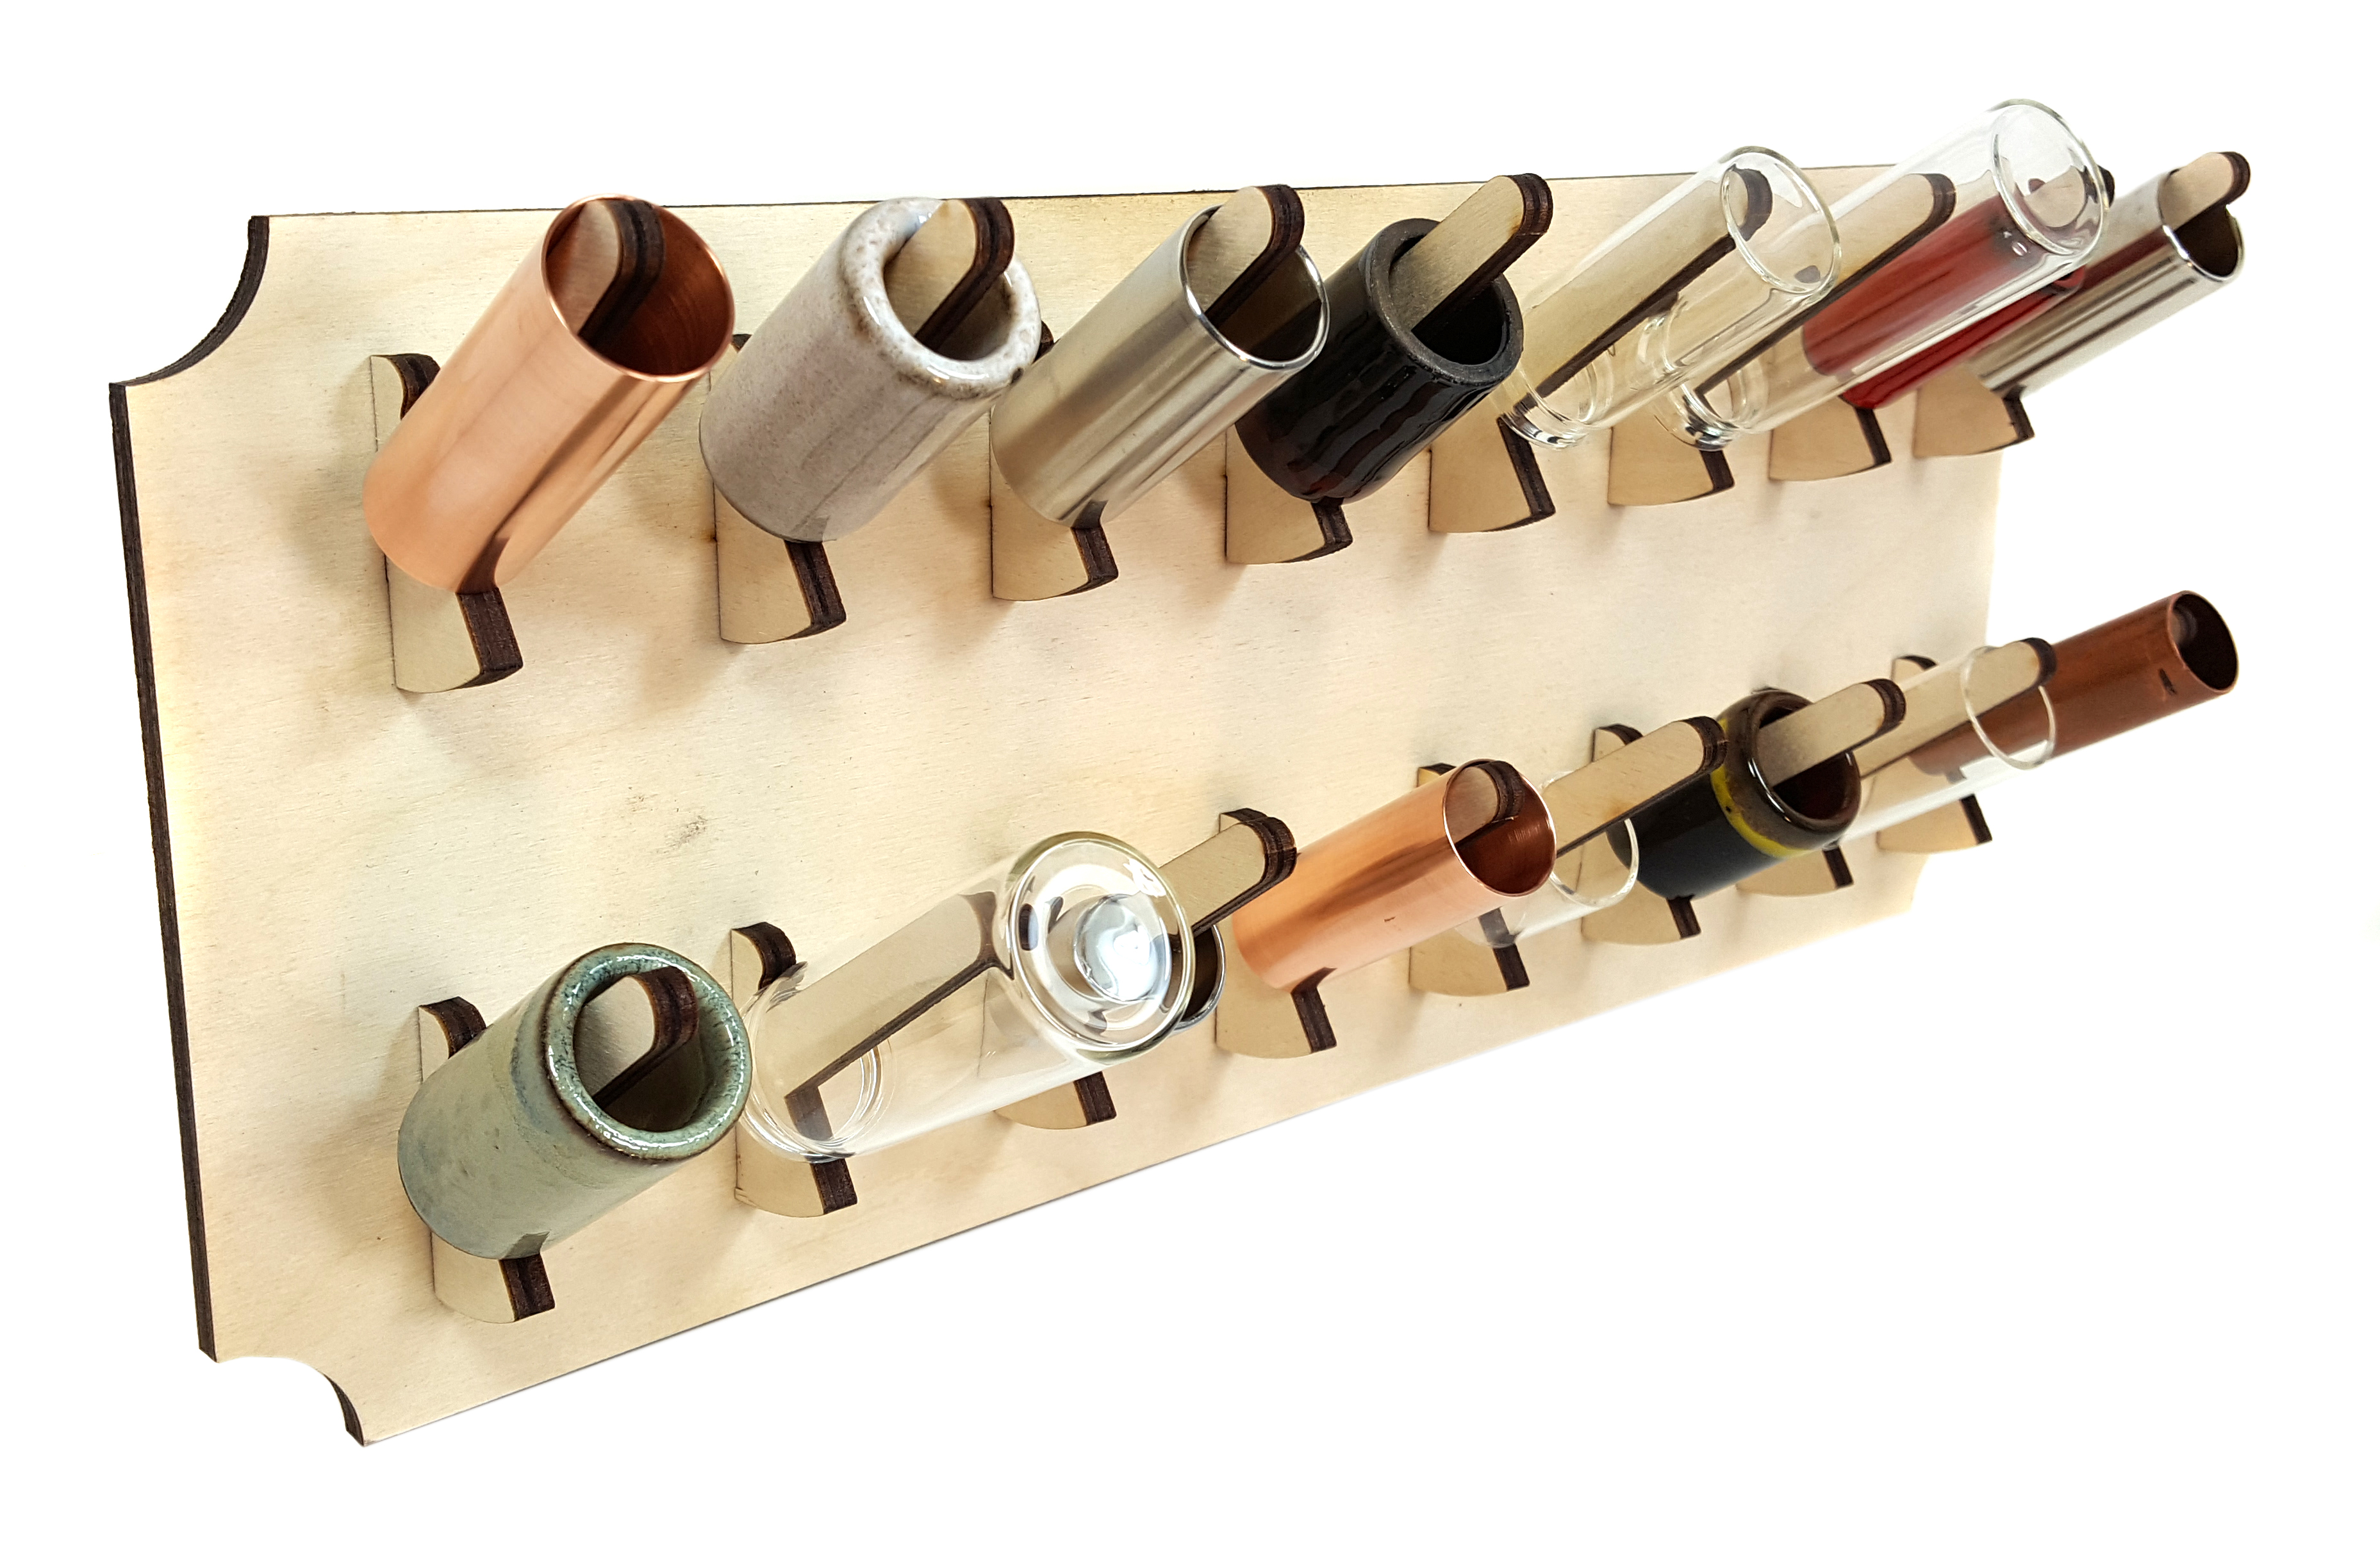 Wall-mount Guitar Slide Display Rack Kit - Easy to Assemble